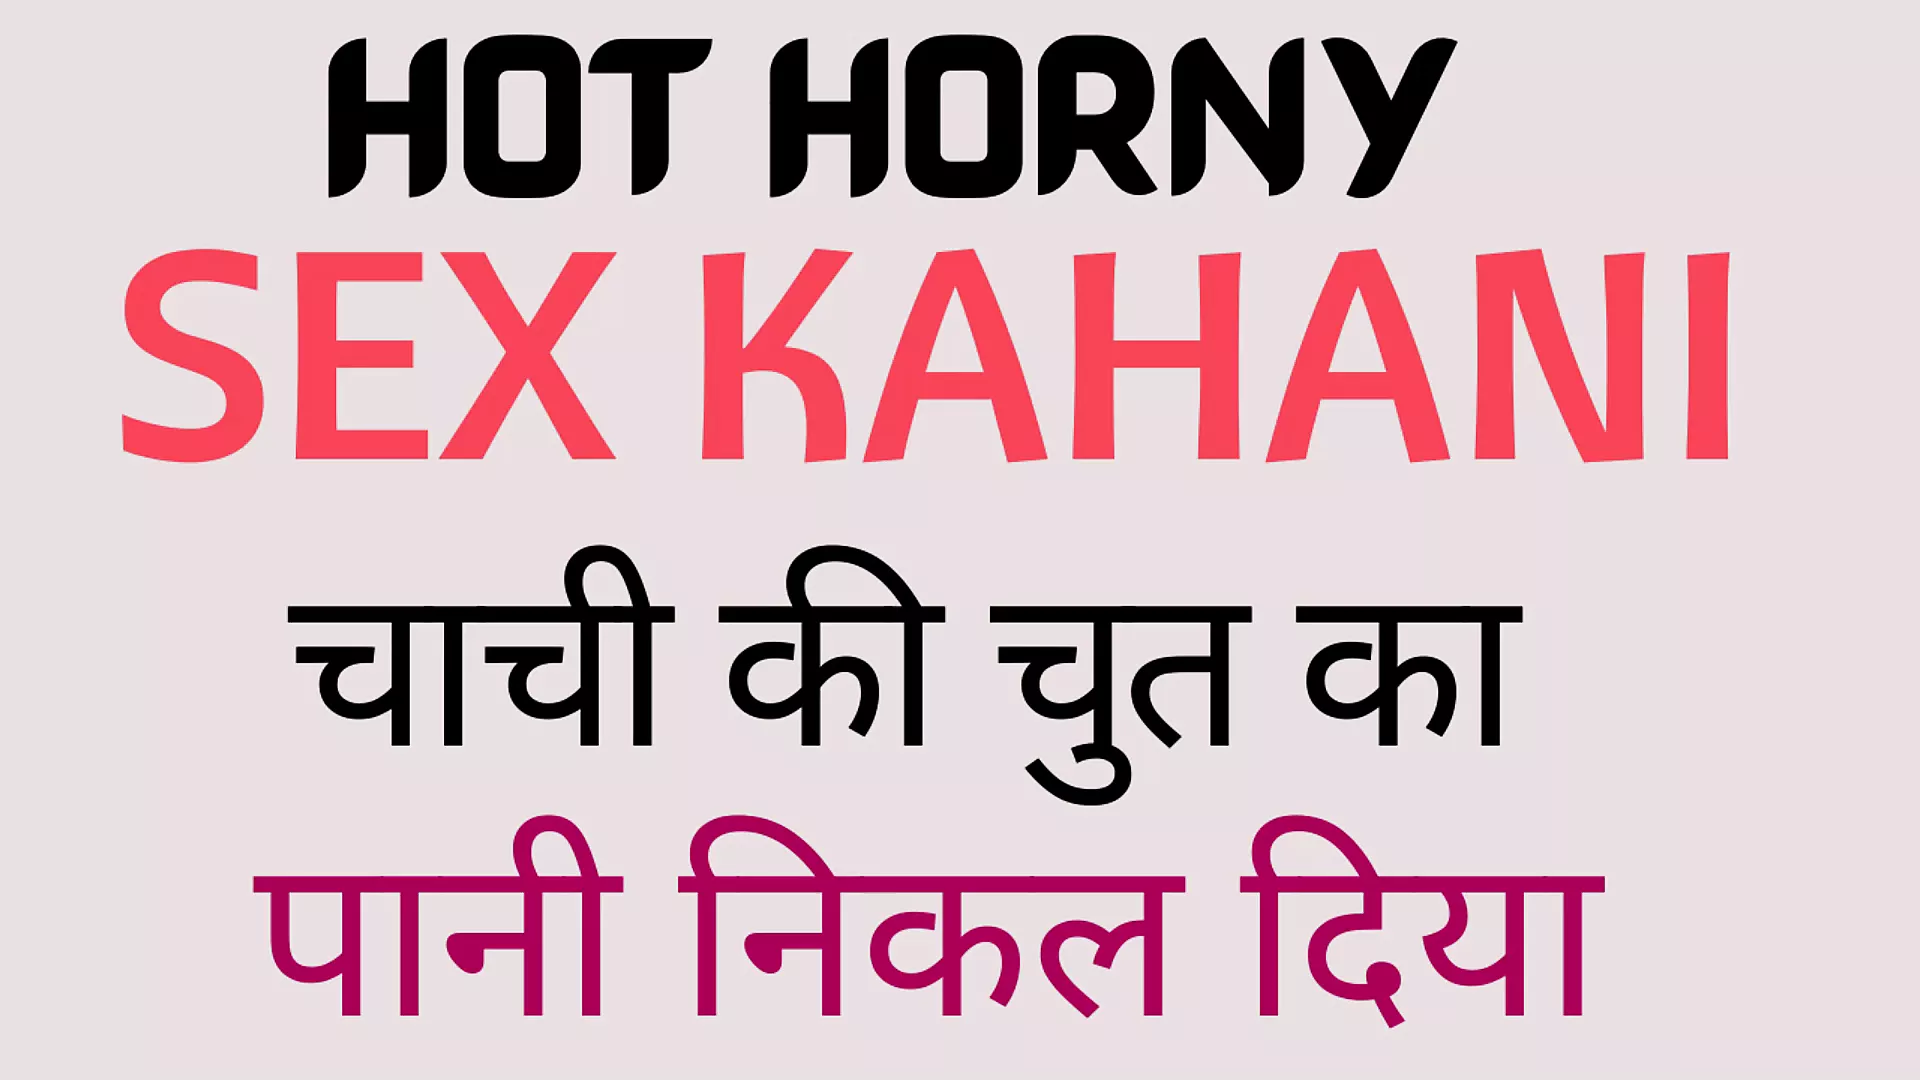 Hot Horny Sex Kahani Sex Story Chachi Ki Chut ka pani - XXXi.PORN Video